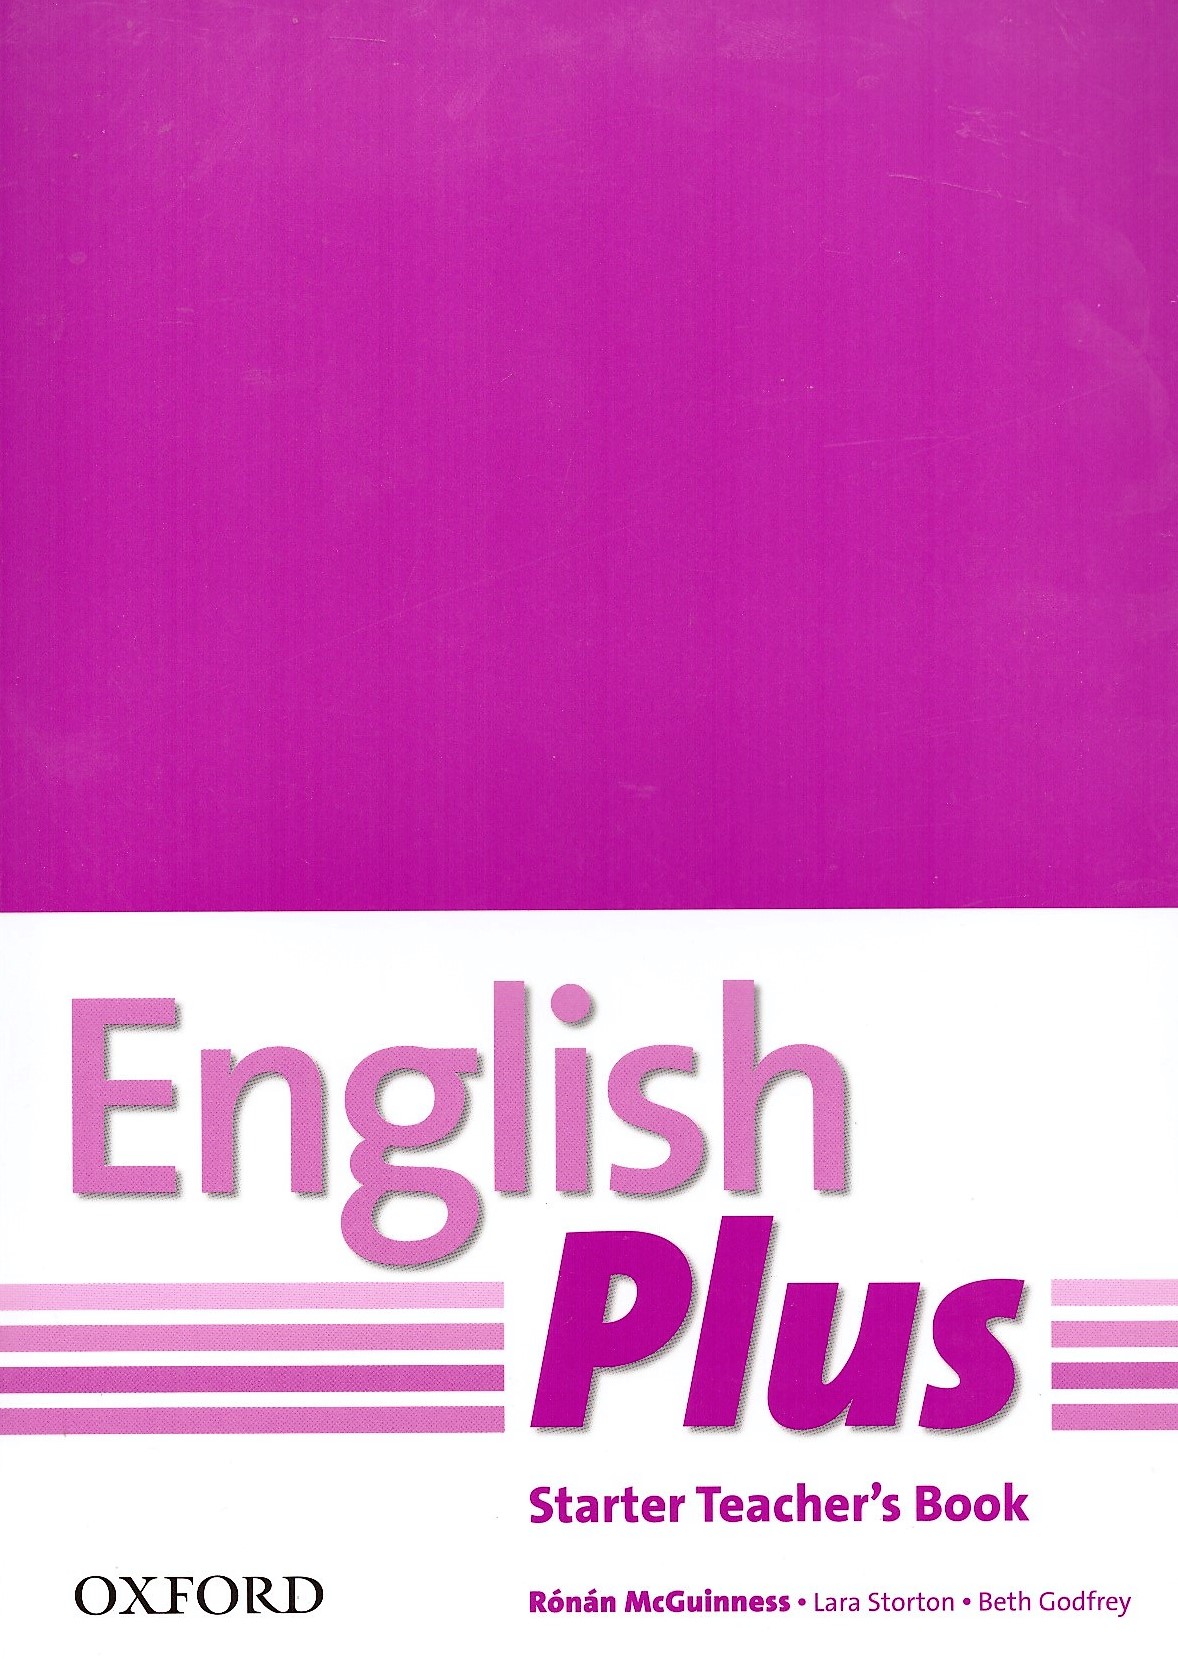 English Plus Starter Teacher's Book / Книга для учителя